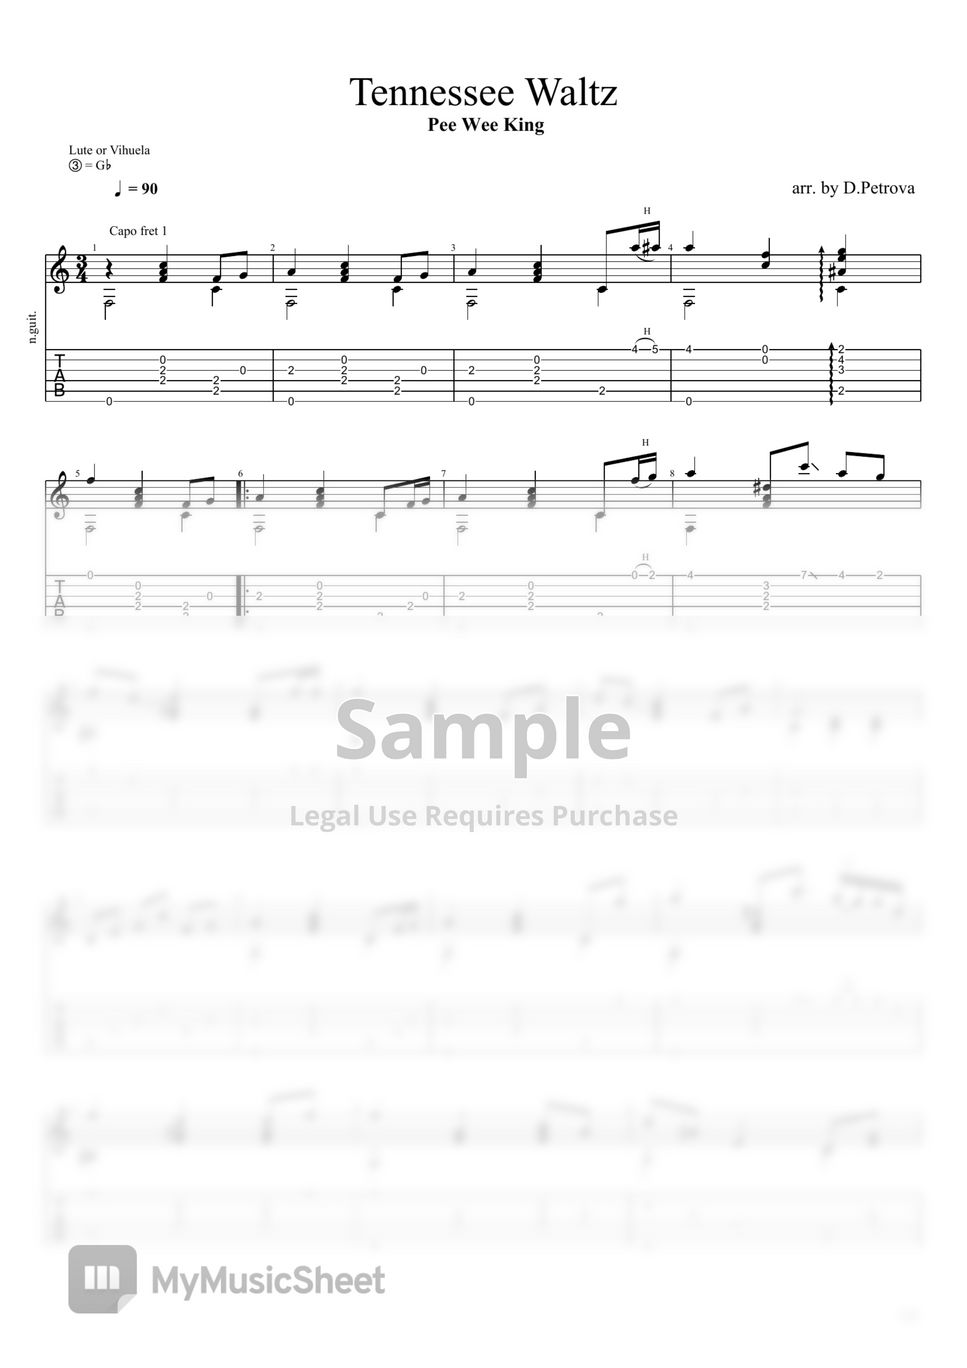 Pee Wee King - Tennessee Waltz (Fingerstyle Guitar Arrangement,  Lute/Vihuela tuning, Capo 1st fret) by D.Petrova (Edora)